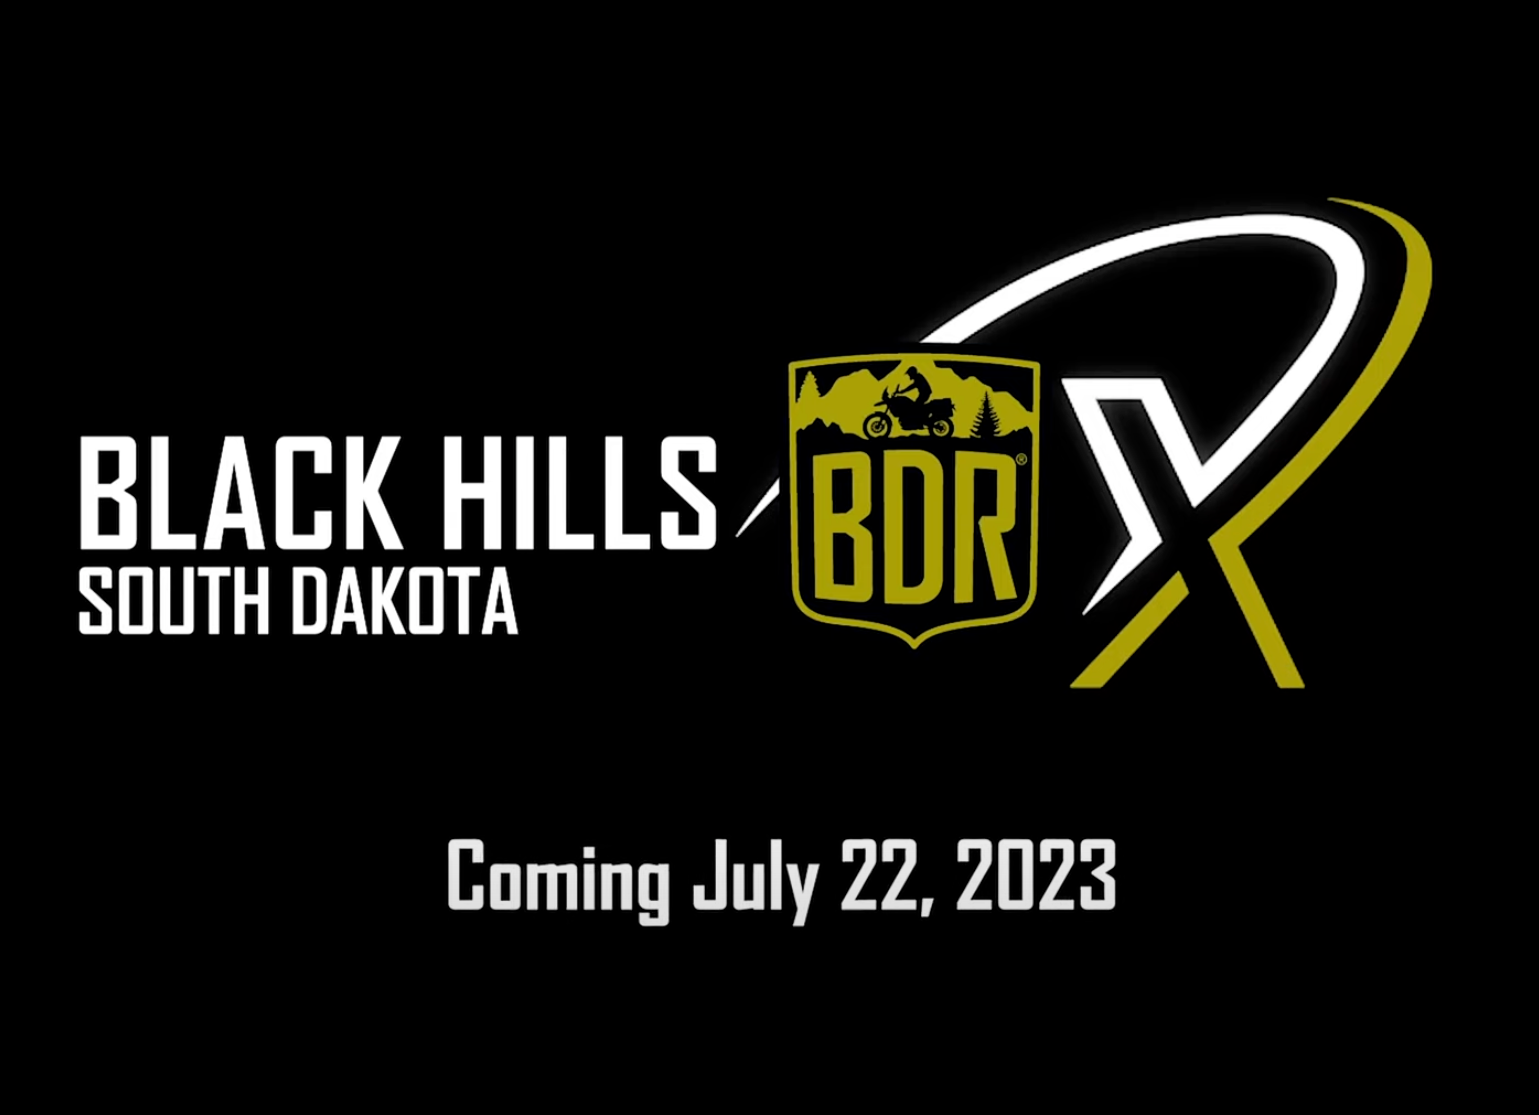 BDR-X Black Hills Release Date